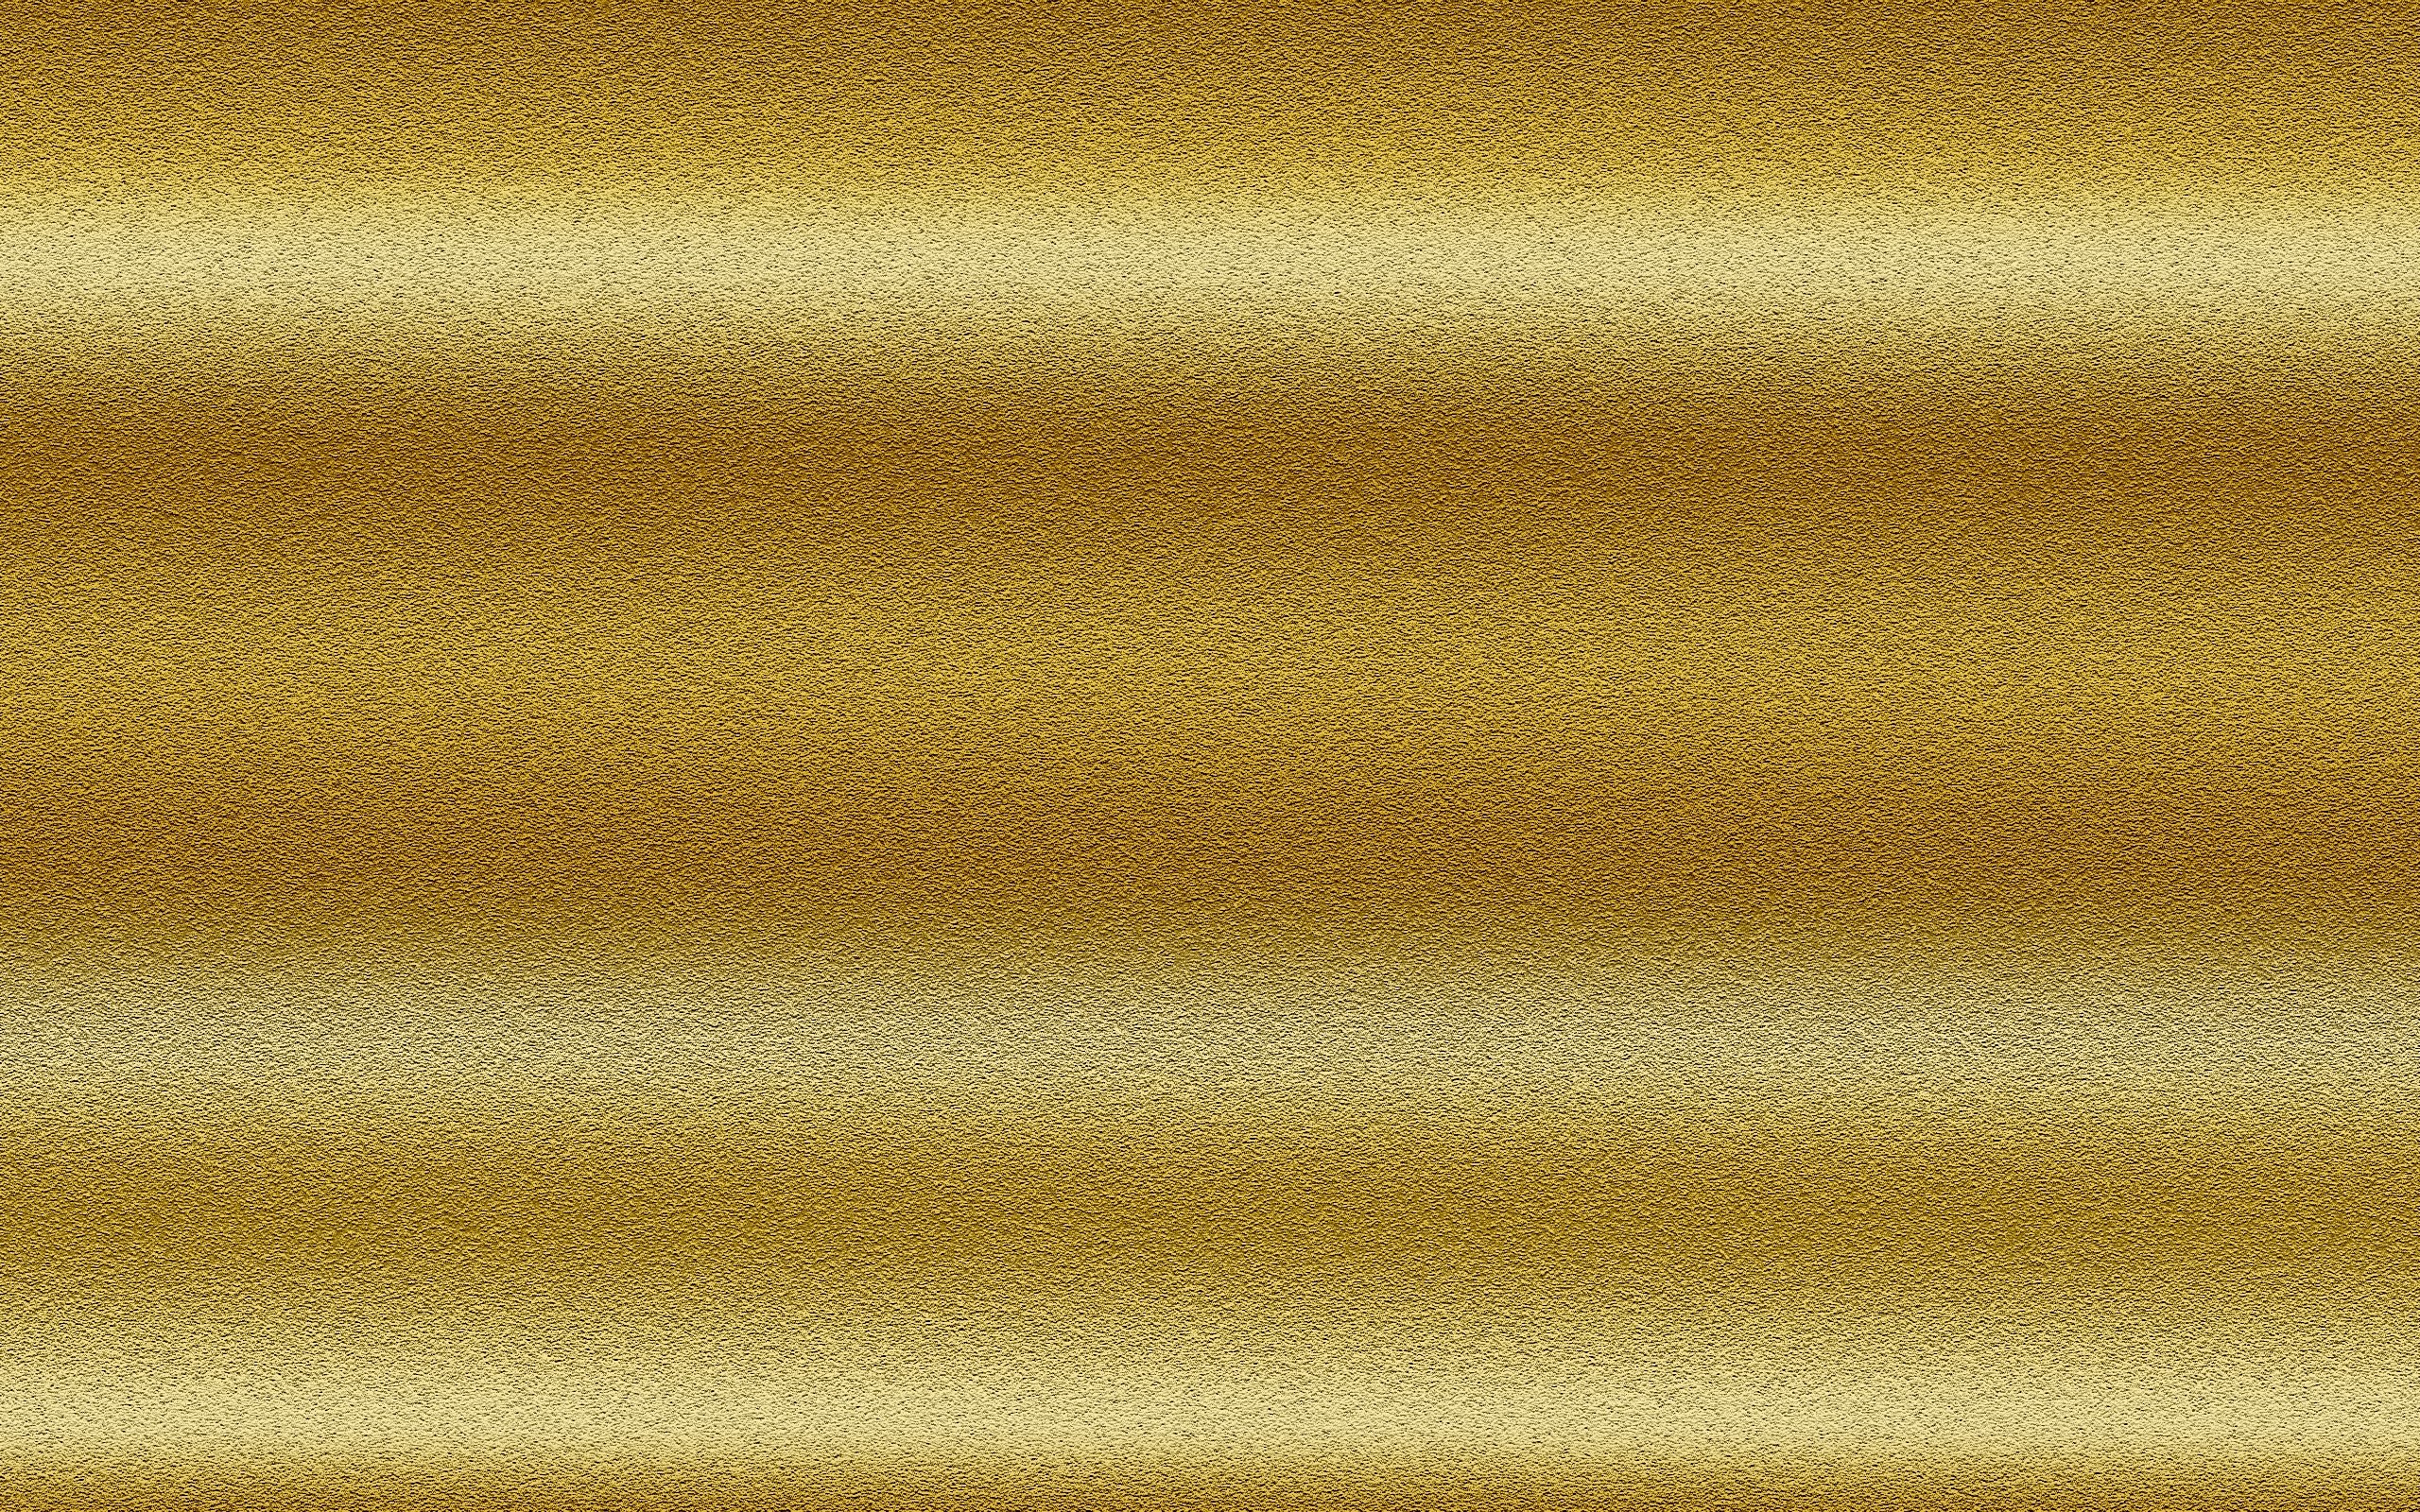 Gold Foil Background Download Free Stunning Hd Afalchi Free images wallpape [afalchi.blogspot.com]